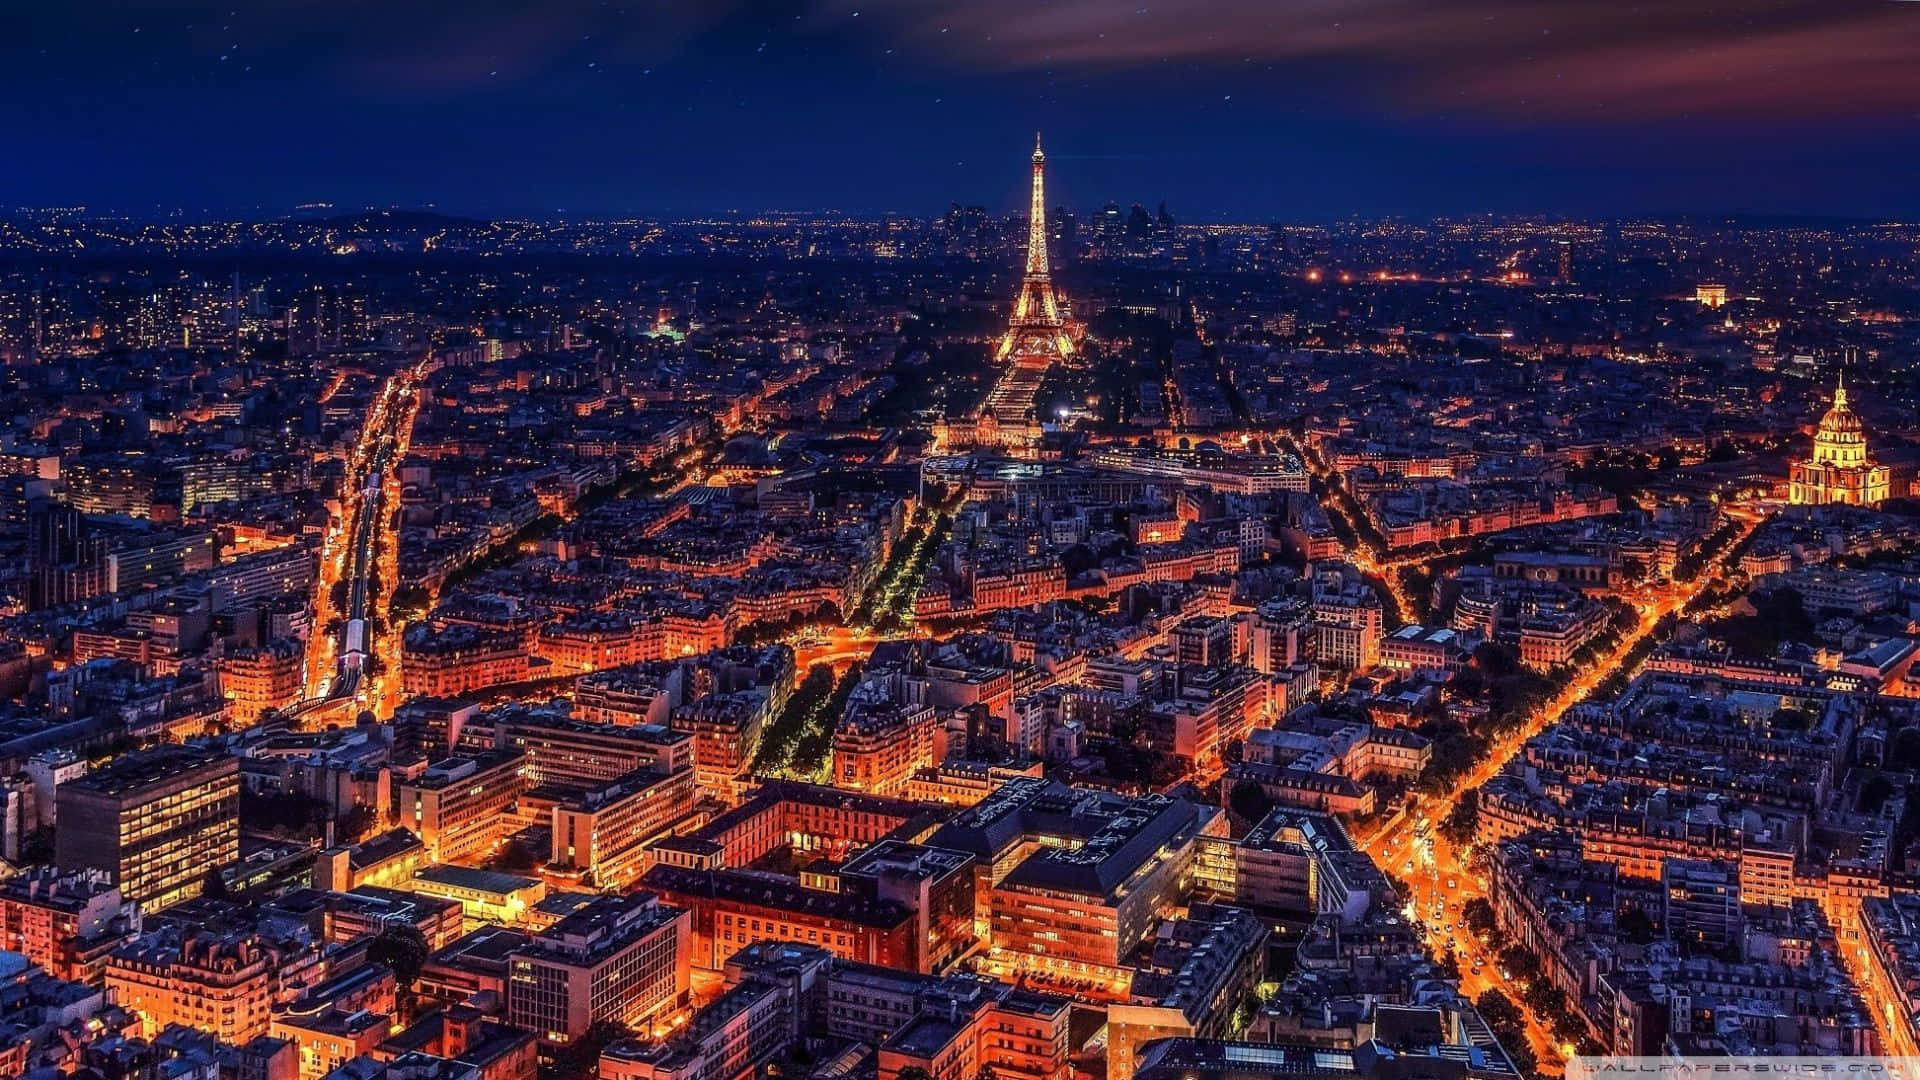 Majestic Eiffel Tower Illuminated at Night in Paris Wallpaper